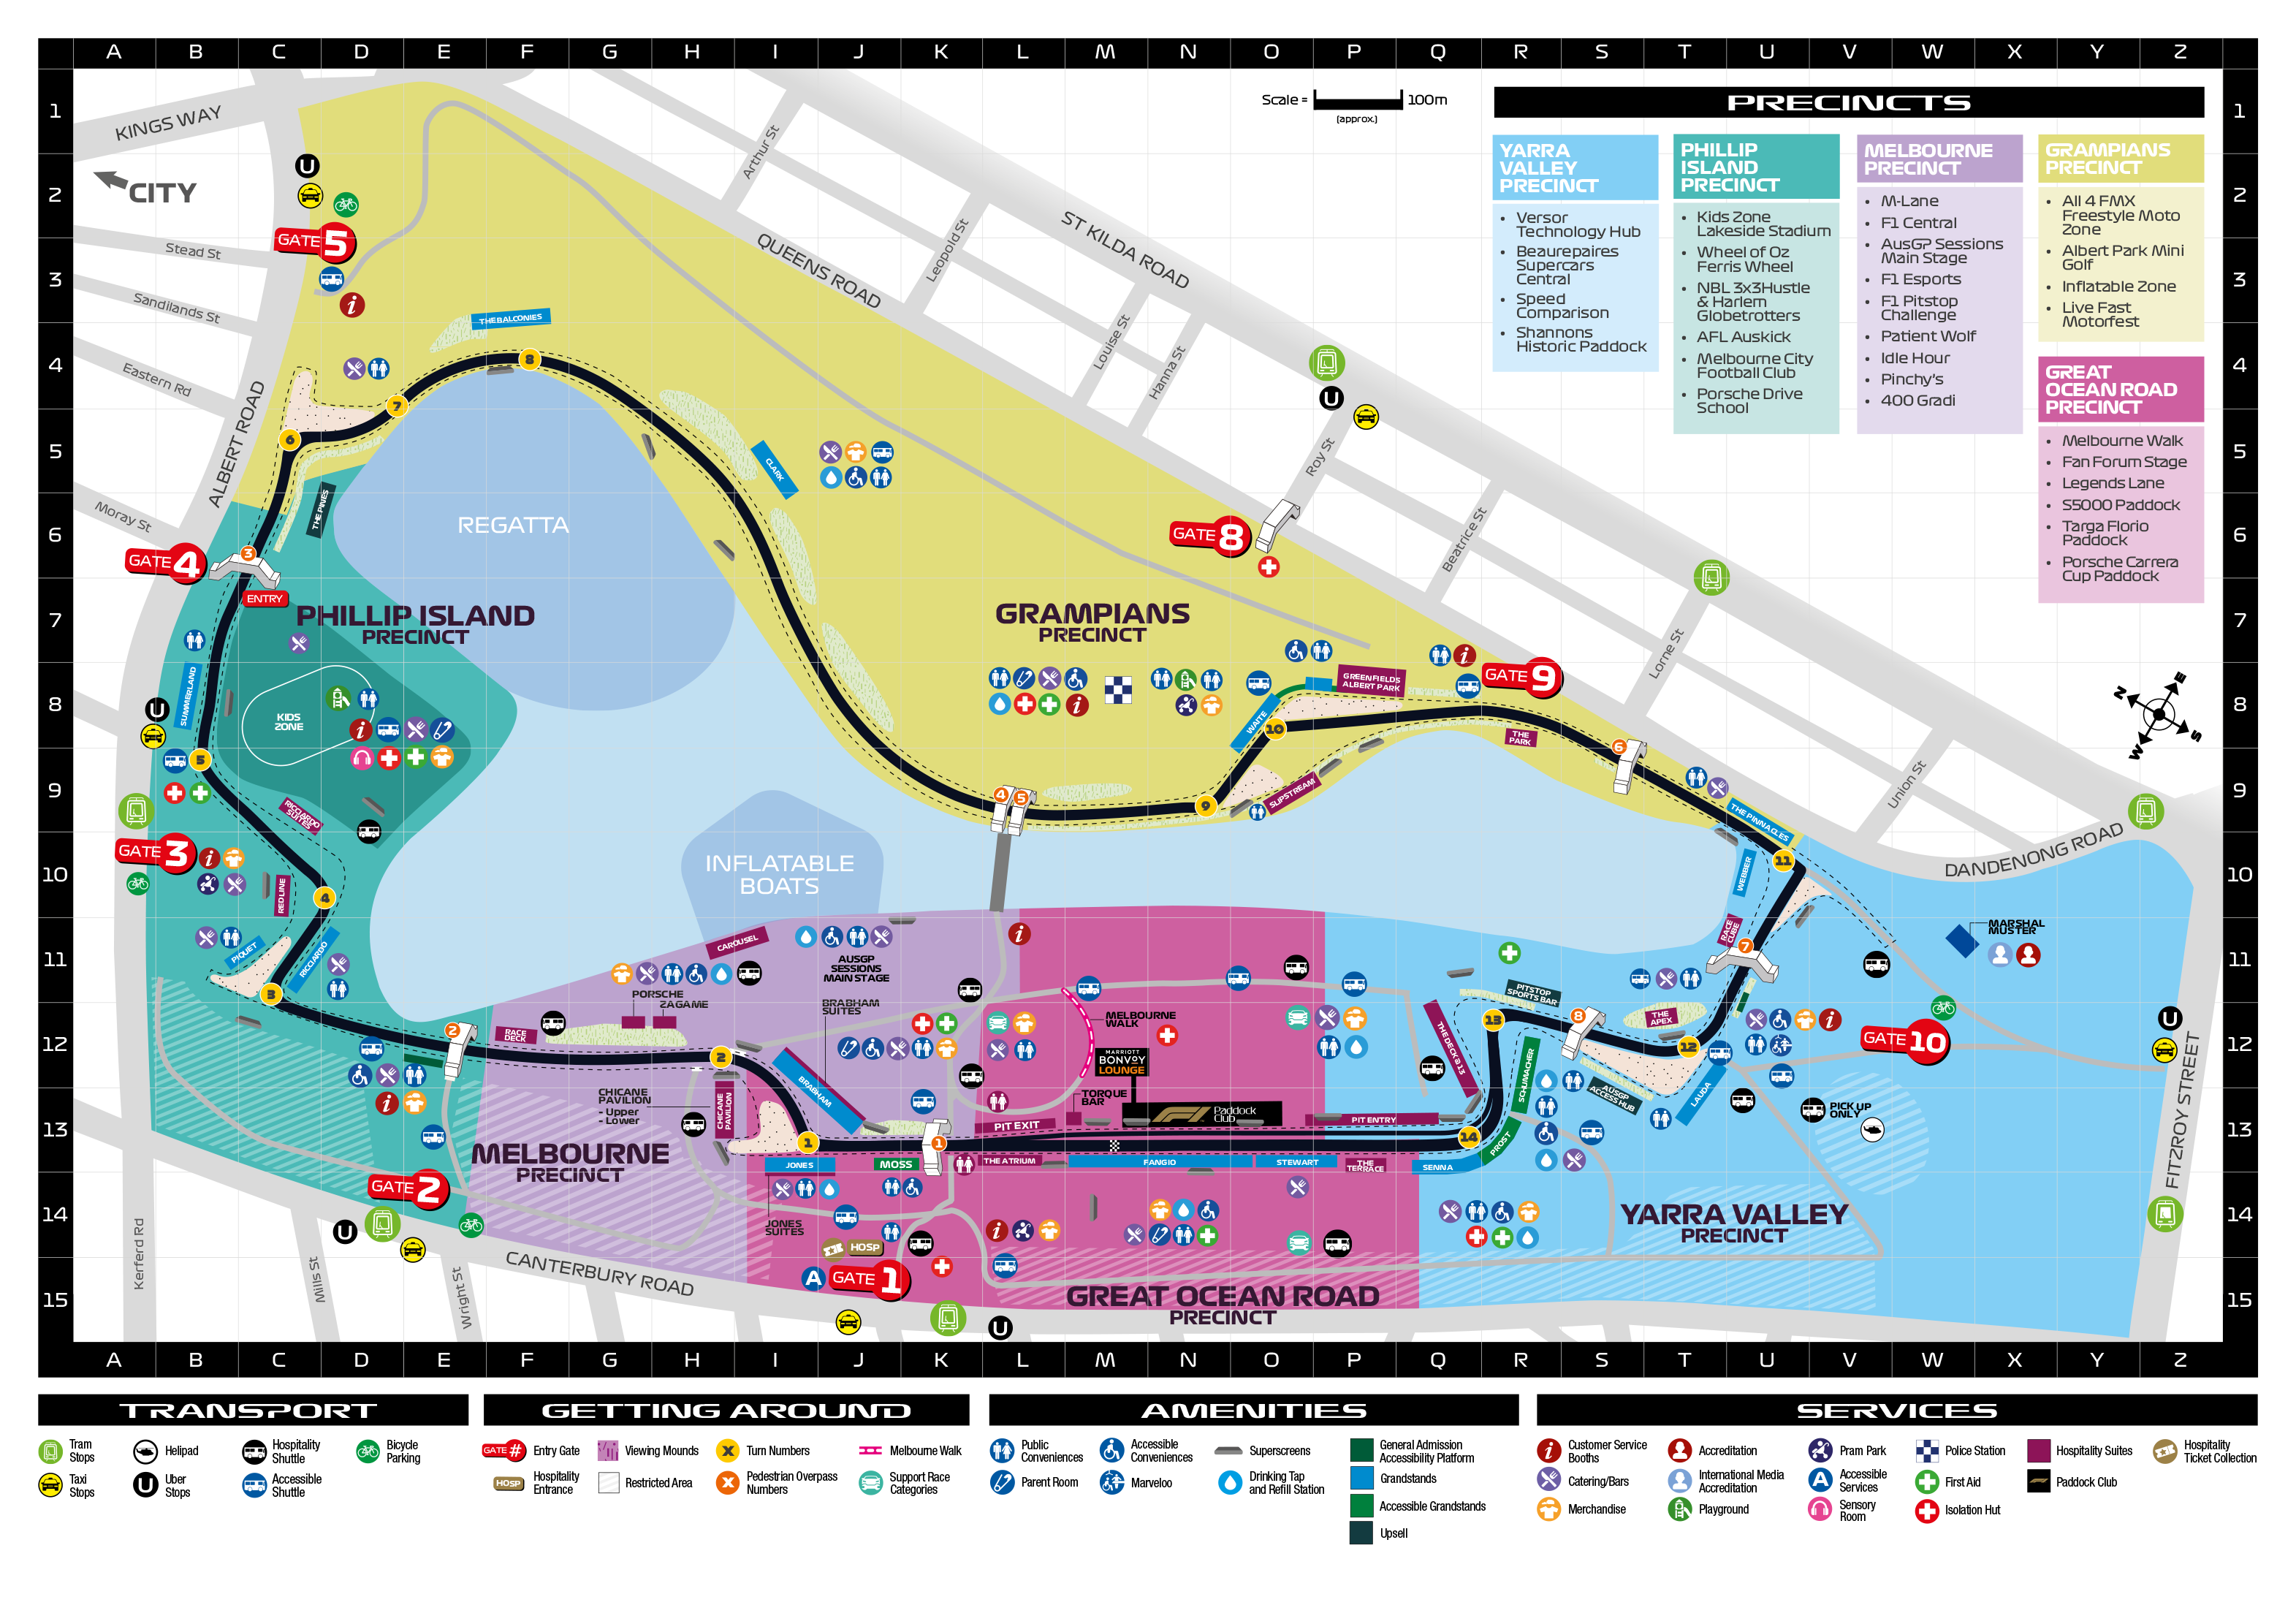 F1 22 - Australian GP Setup!  Albert Park is a very fast circuit